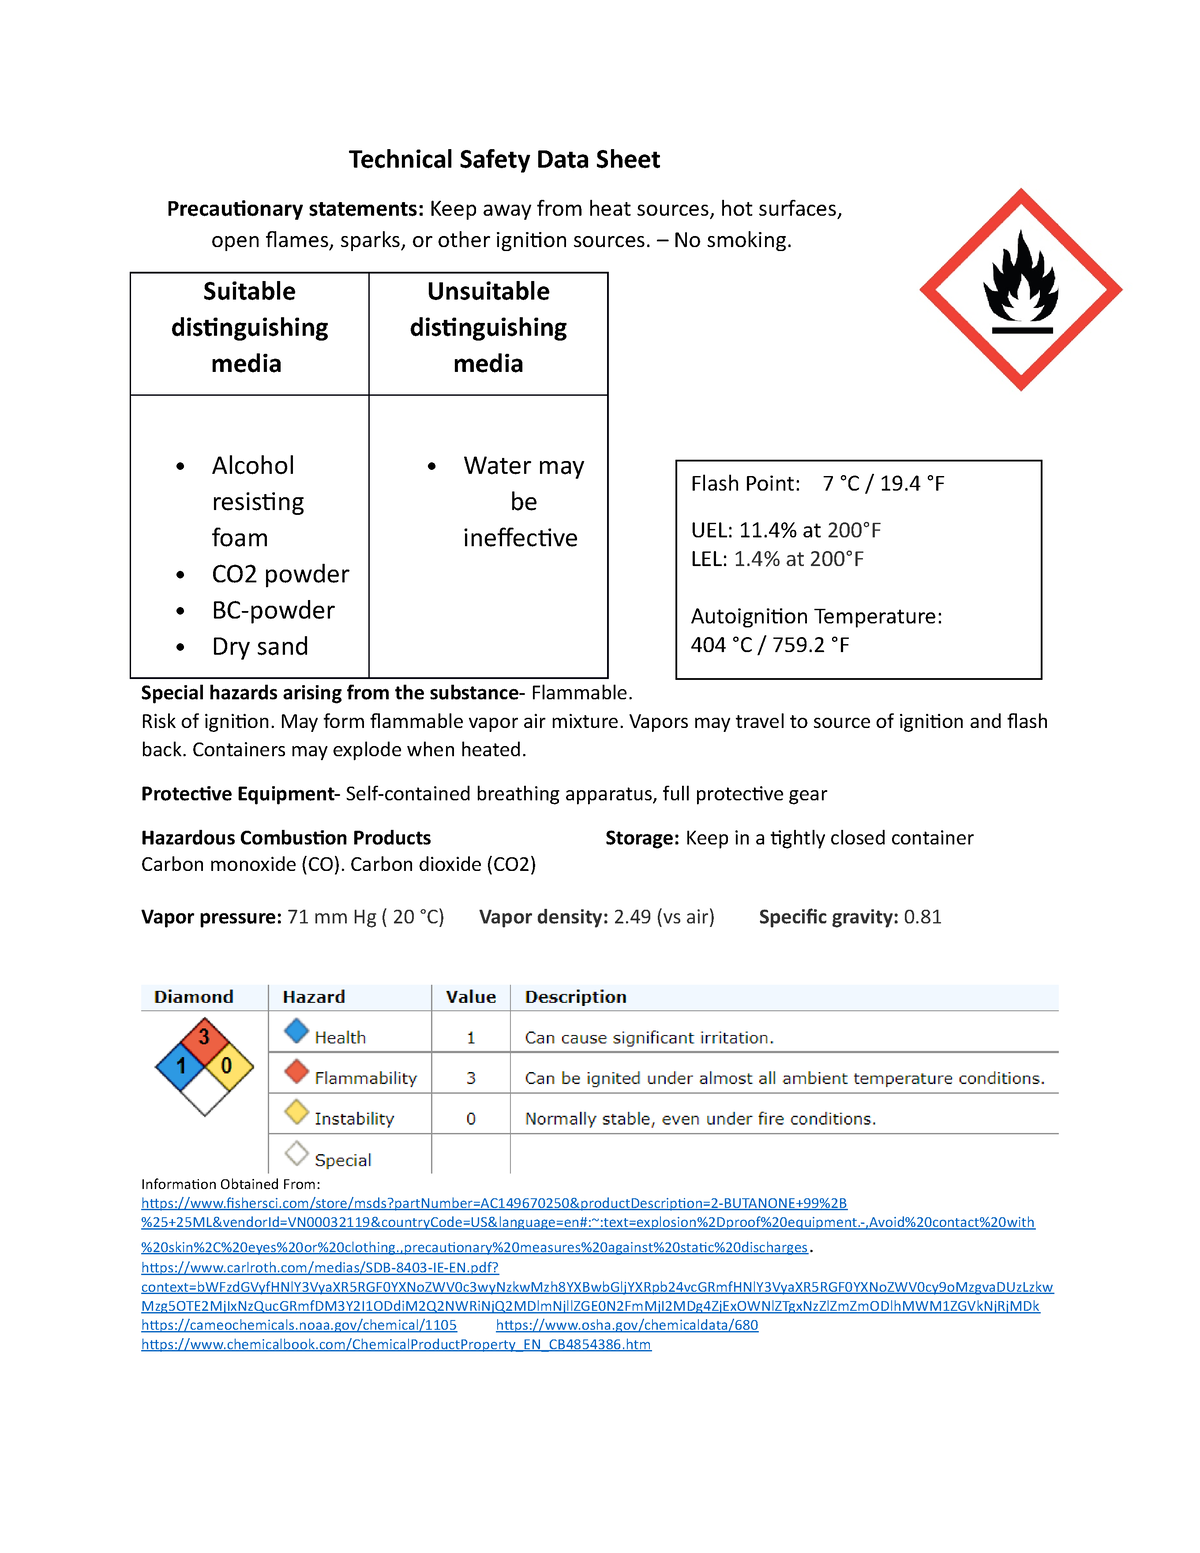 Technical Safety Data Sheet 2-butanone - Technical Safety Data Sheet ...